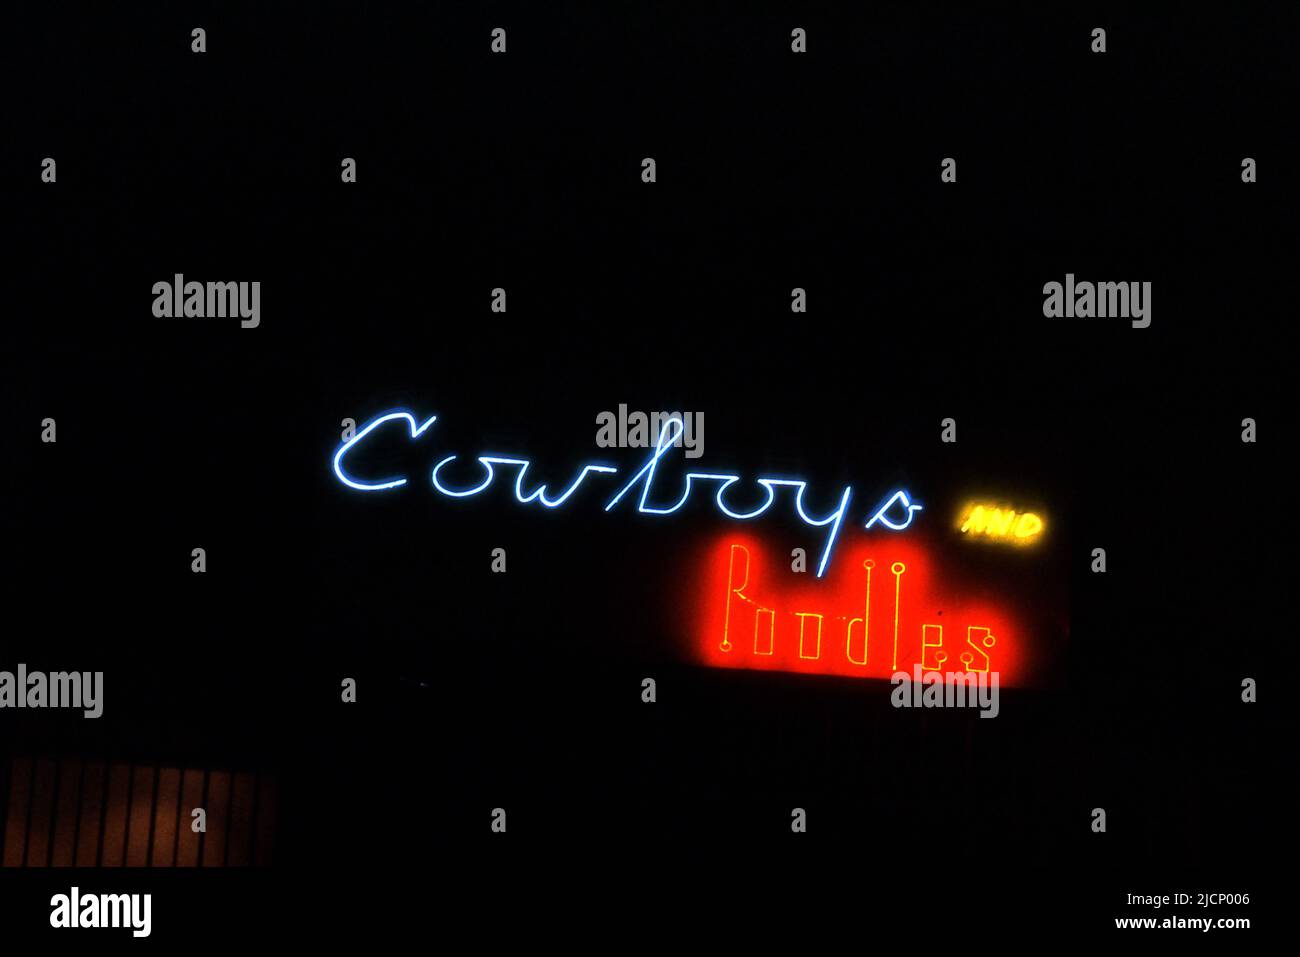 Cowboys and Poodles, letrero Neon, Melrose Ave., Los Angeles, CA Foto de stock